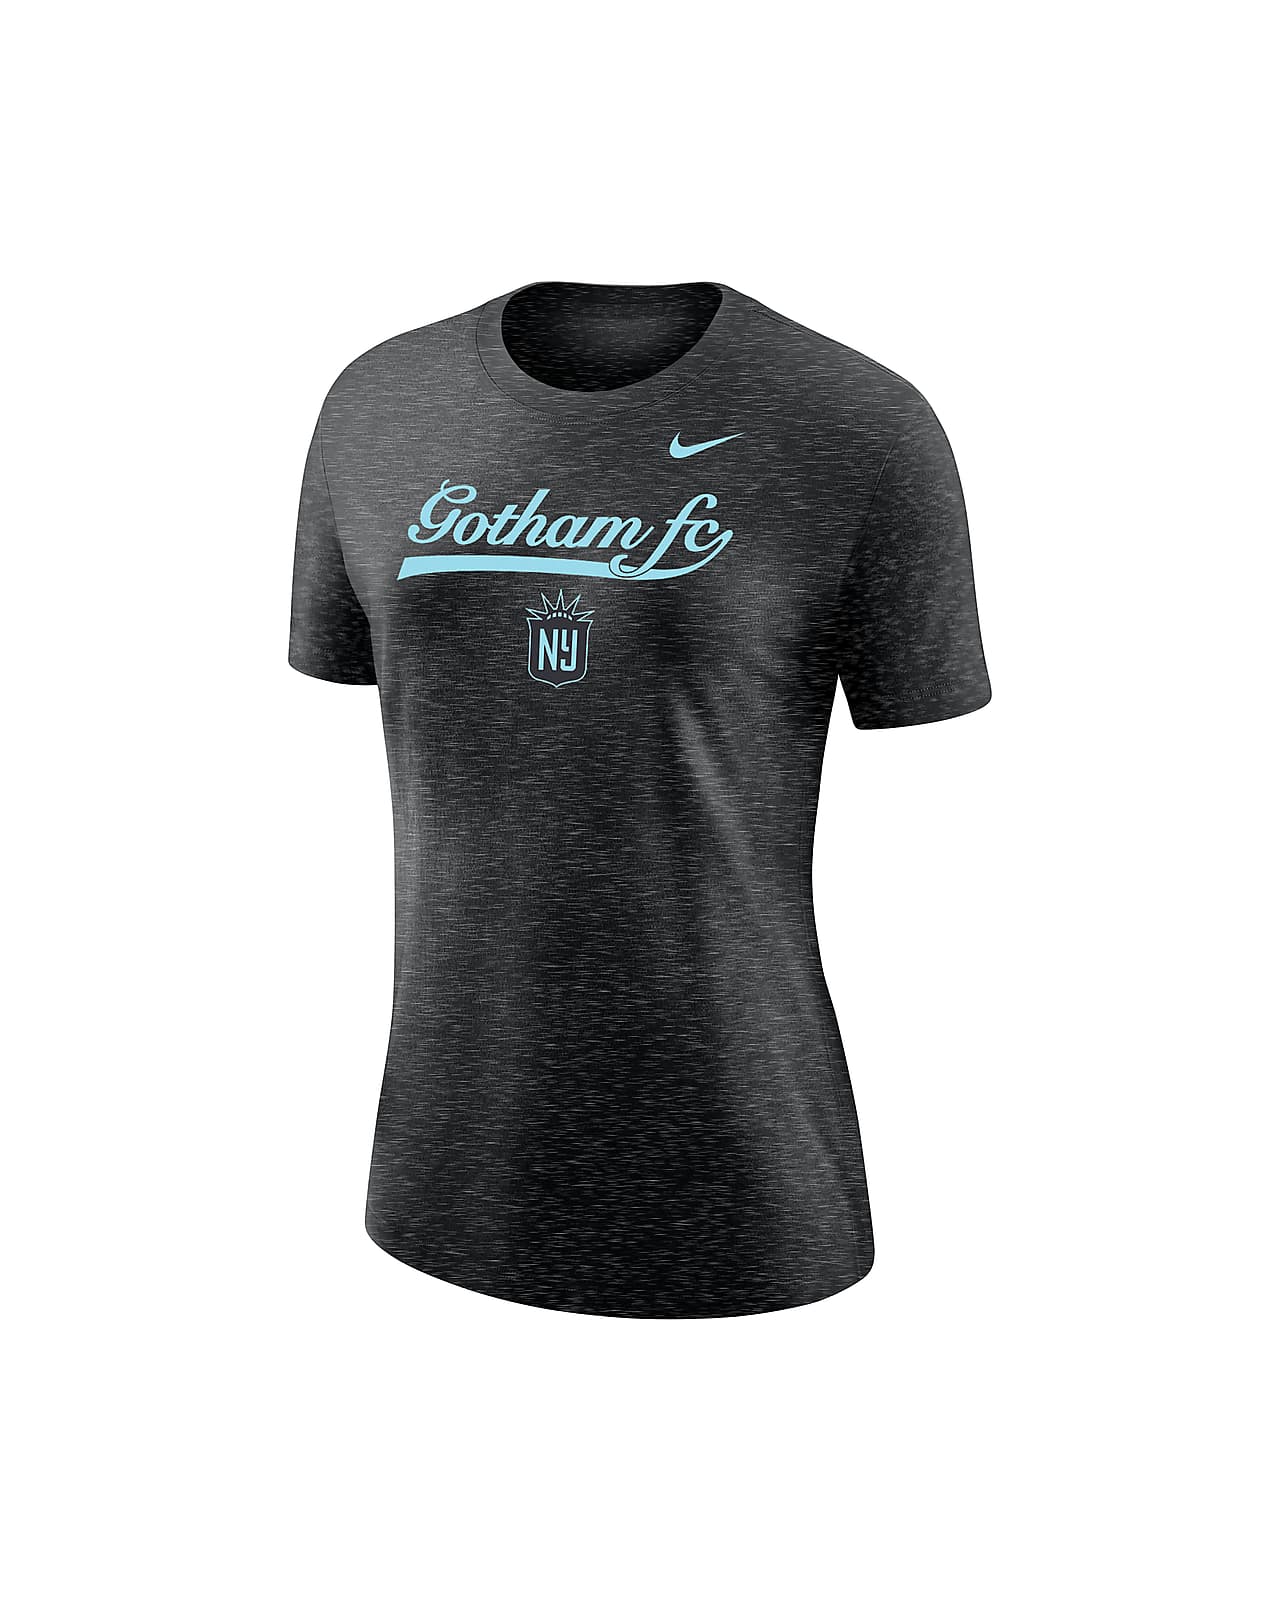 Gotham FC Women's Nike Soccer Varsity T-Shirt